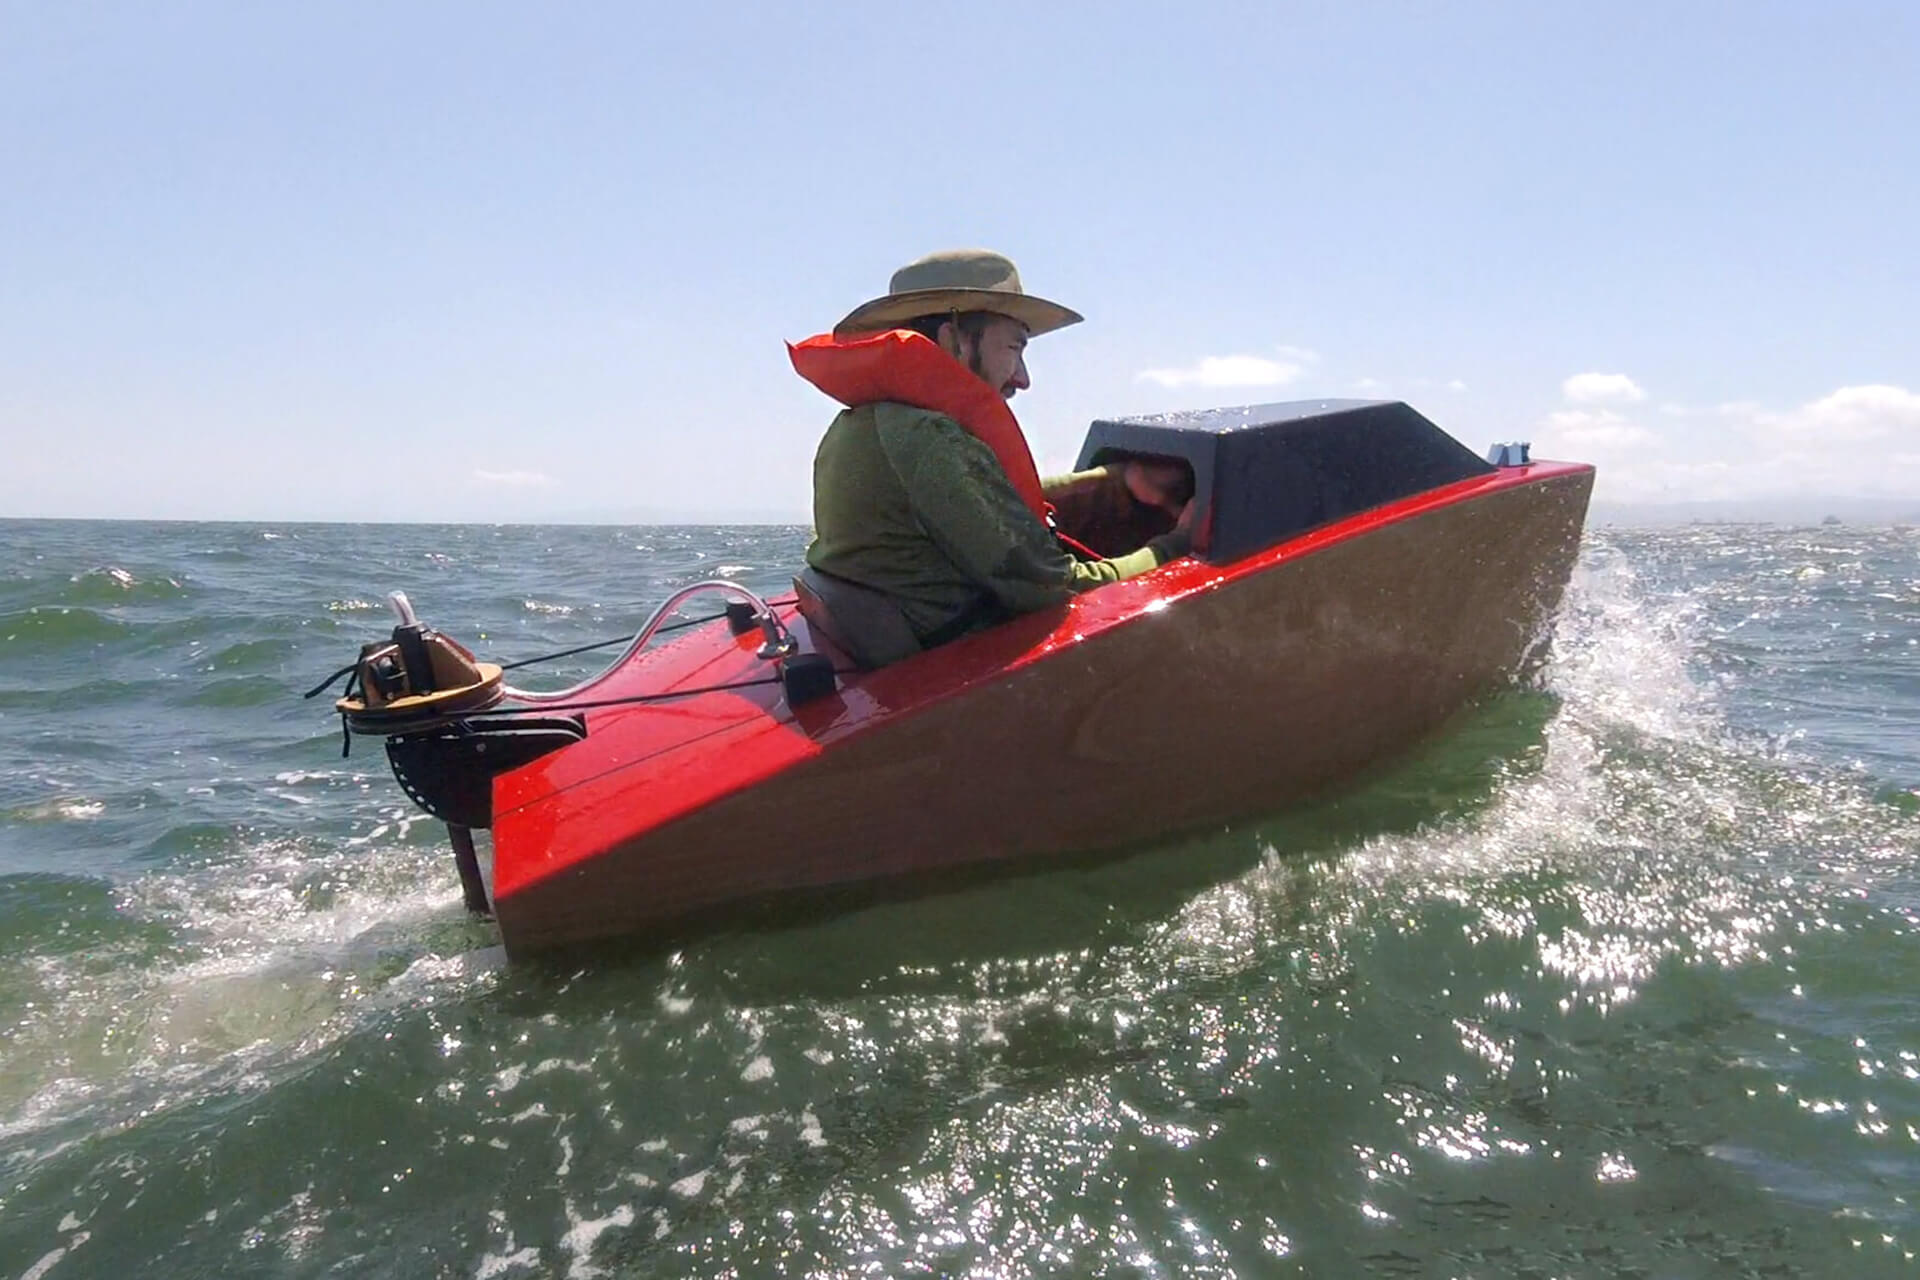 Josh riding in choppy ocean water in his mini boat